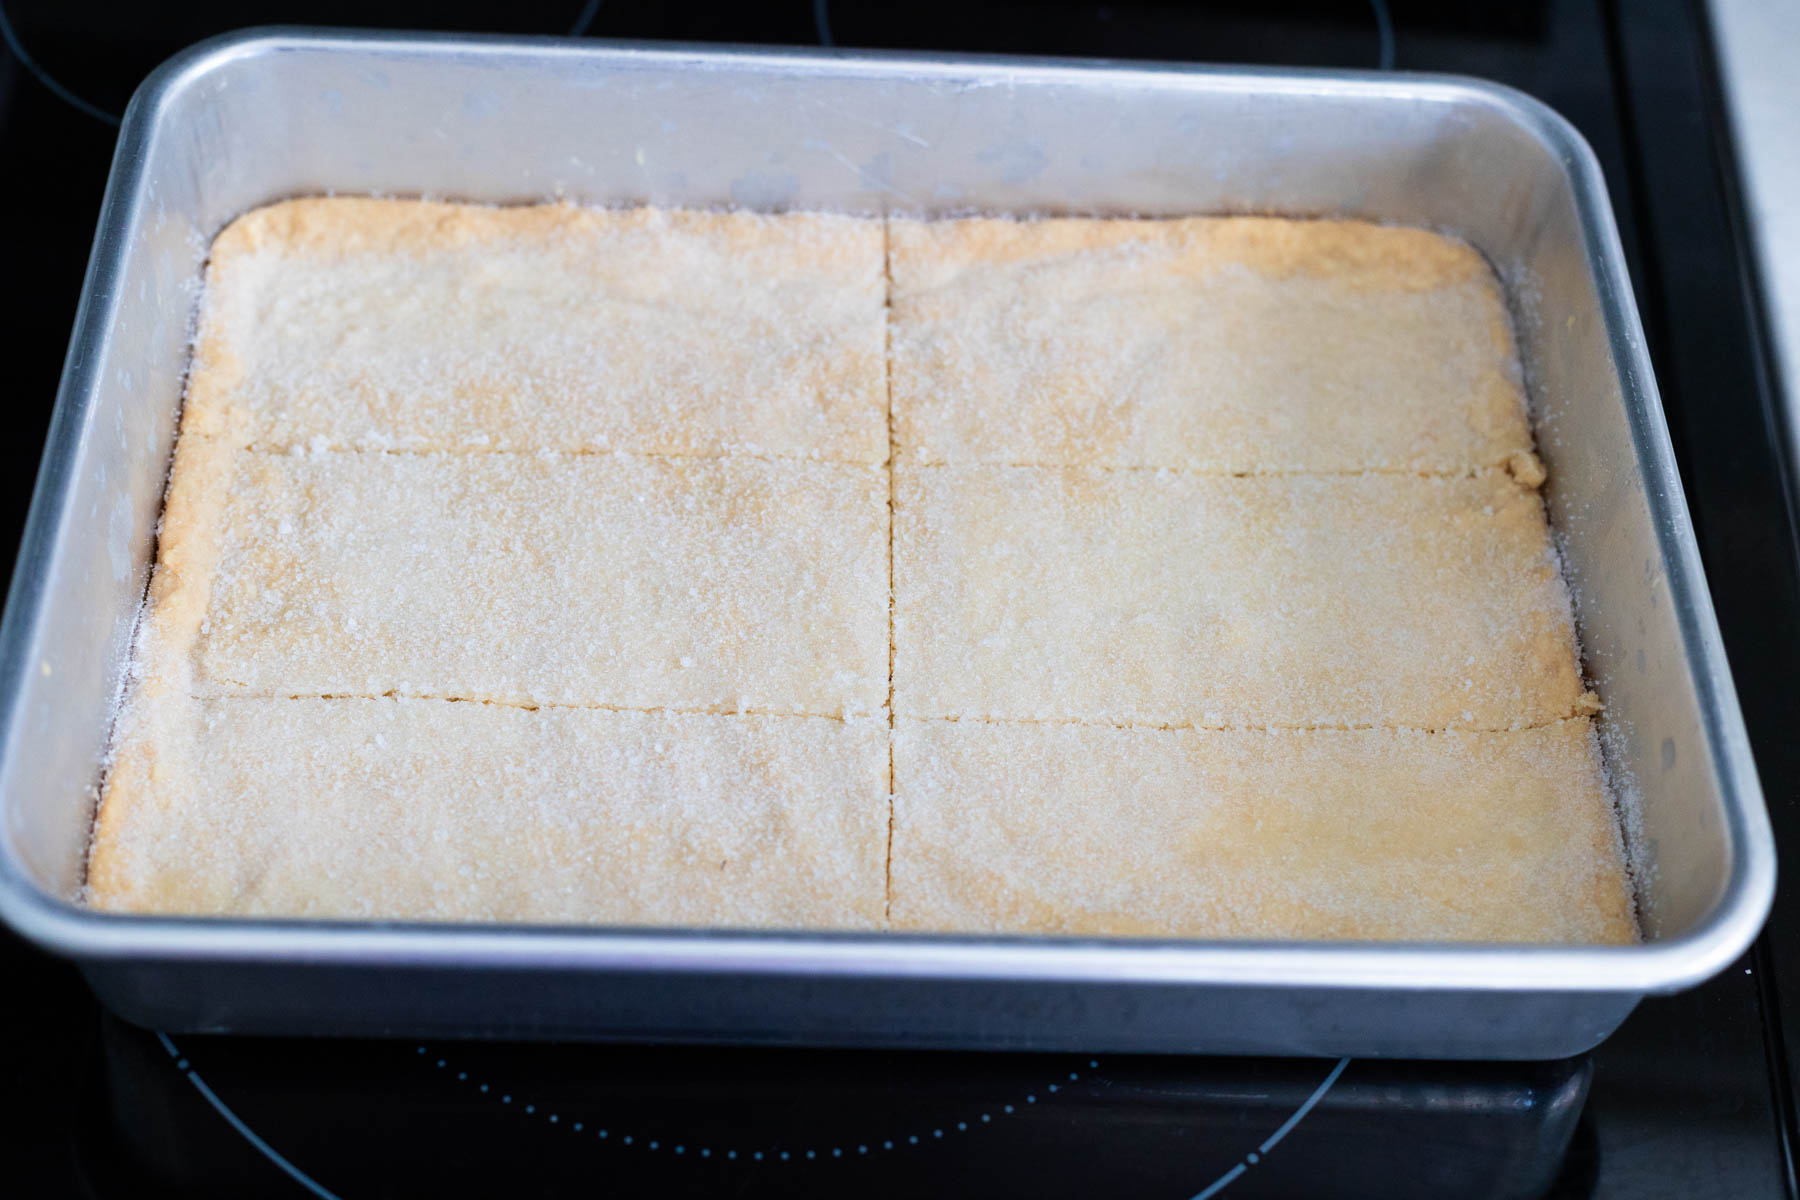 The pan of shortbread cookies has a perpendicular cut half way down the pan.